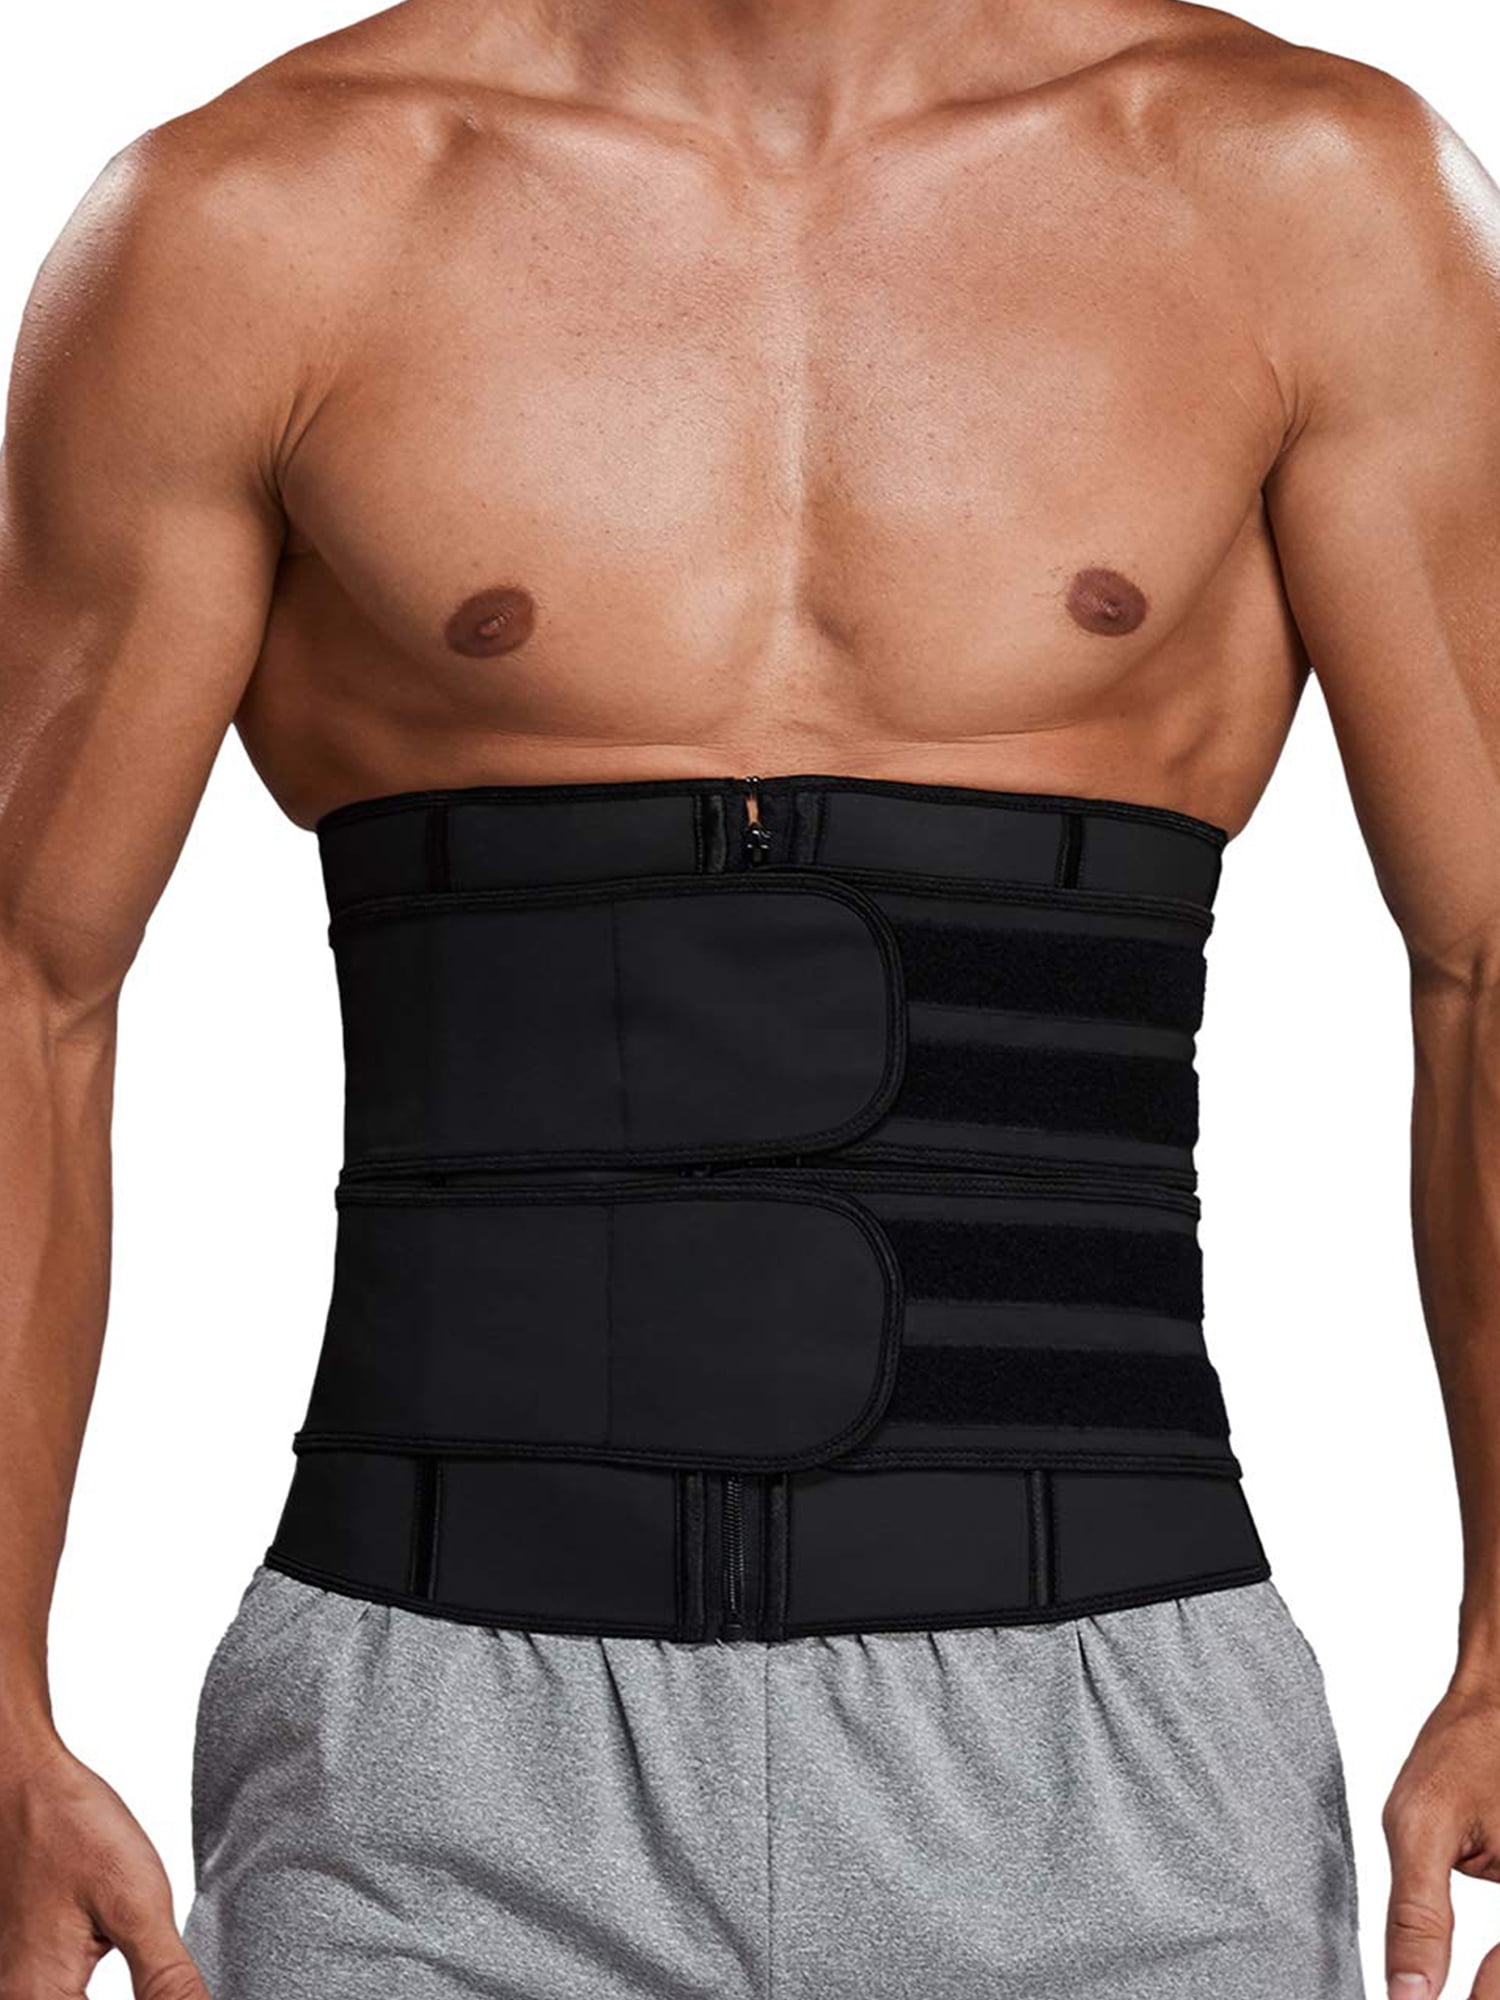 Details about   Men's Body Shaper Vest Neoprene Sauna Sweat Waist Trainer Tummy Belt Fat Burner 